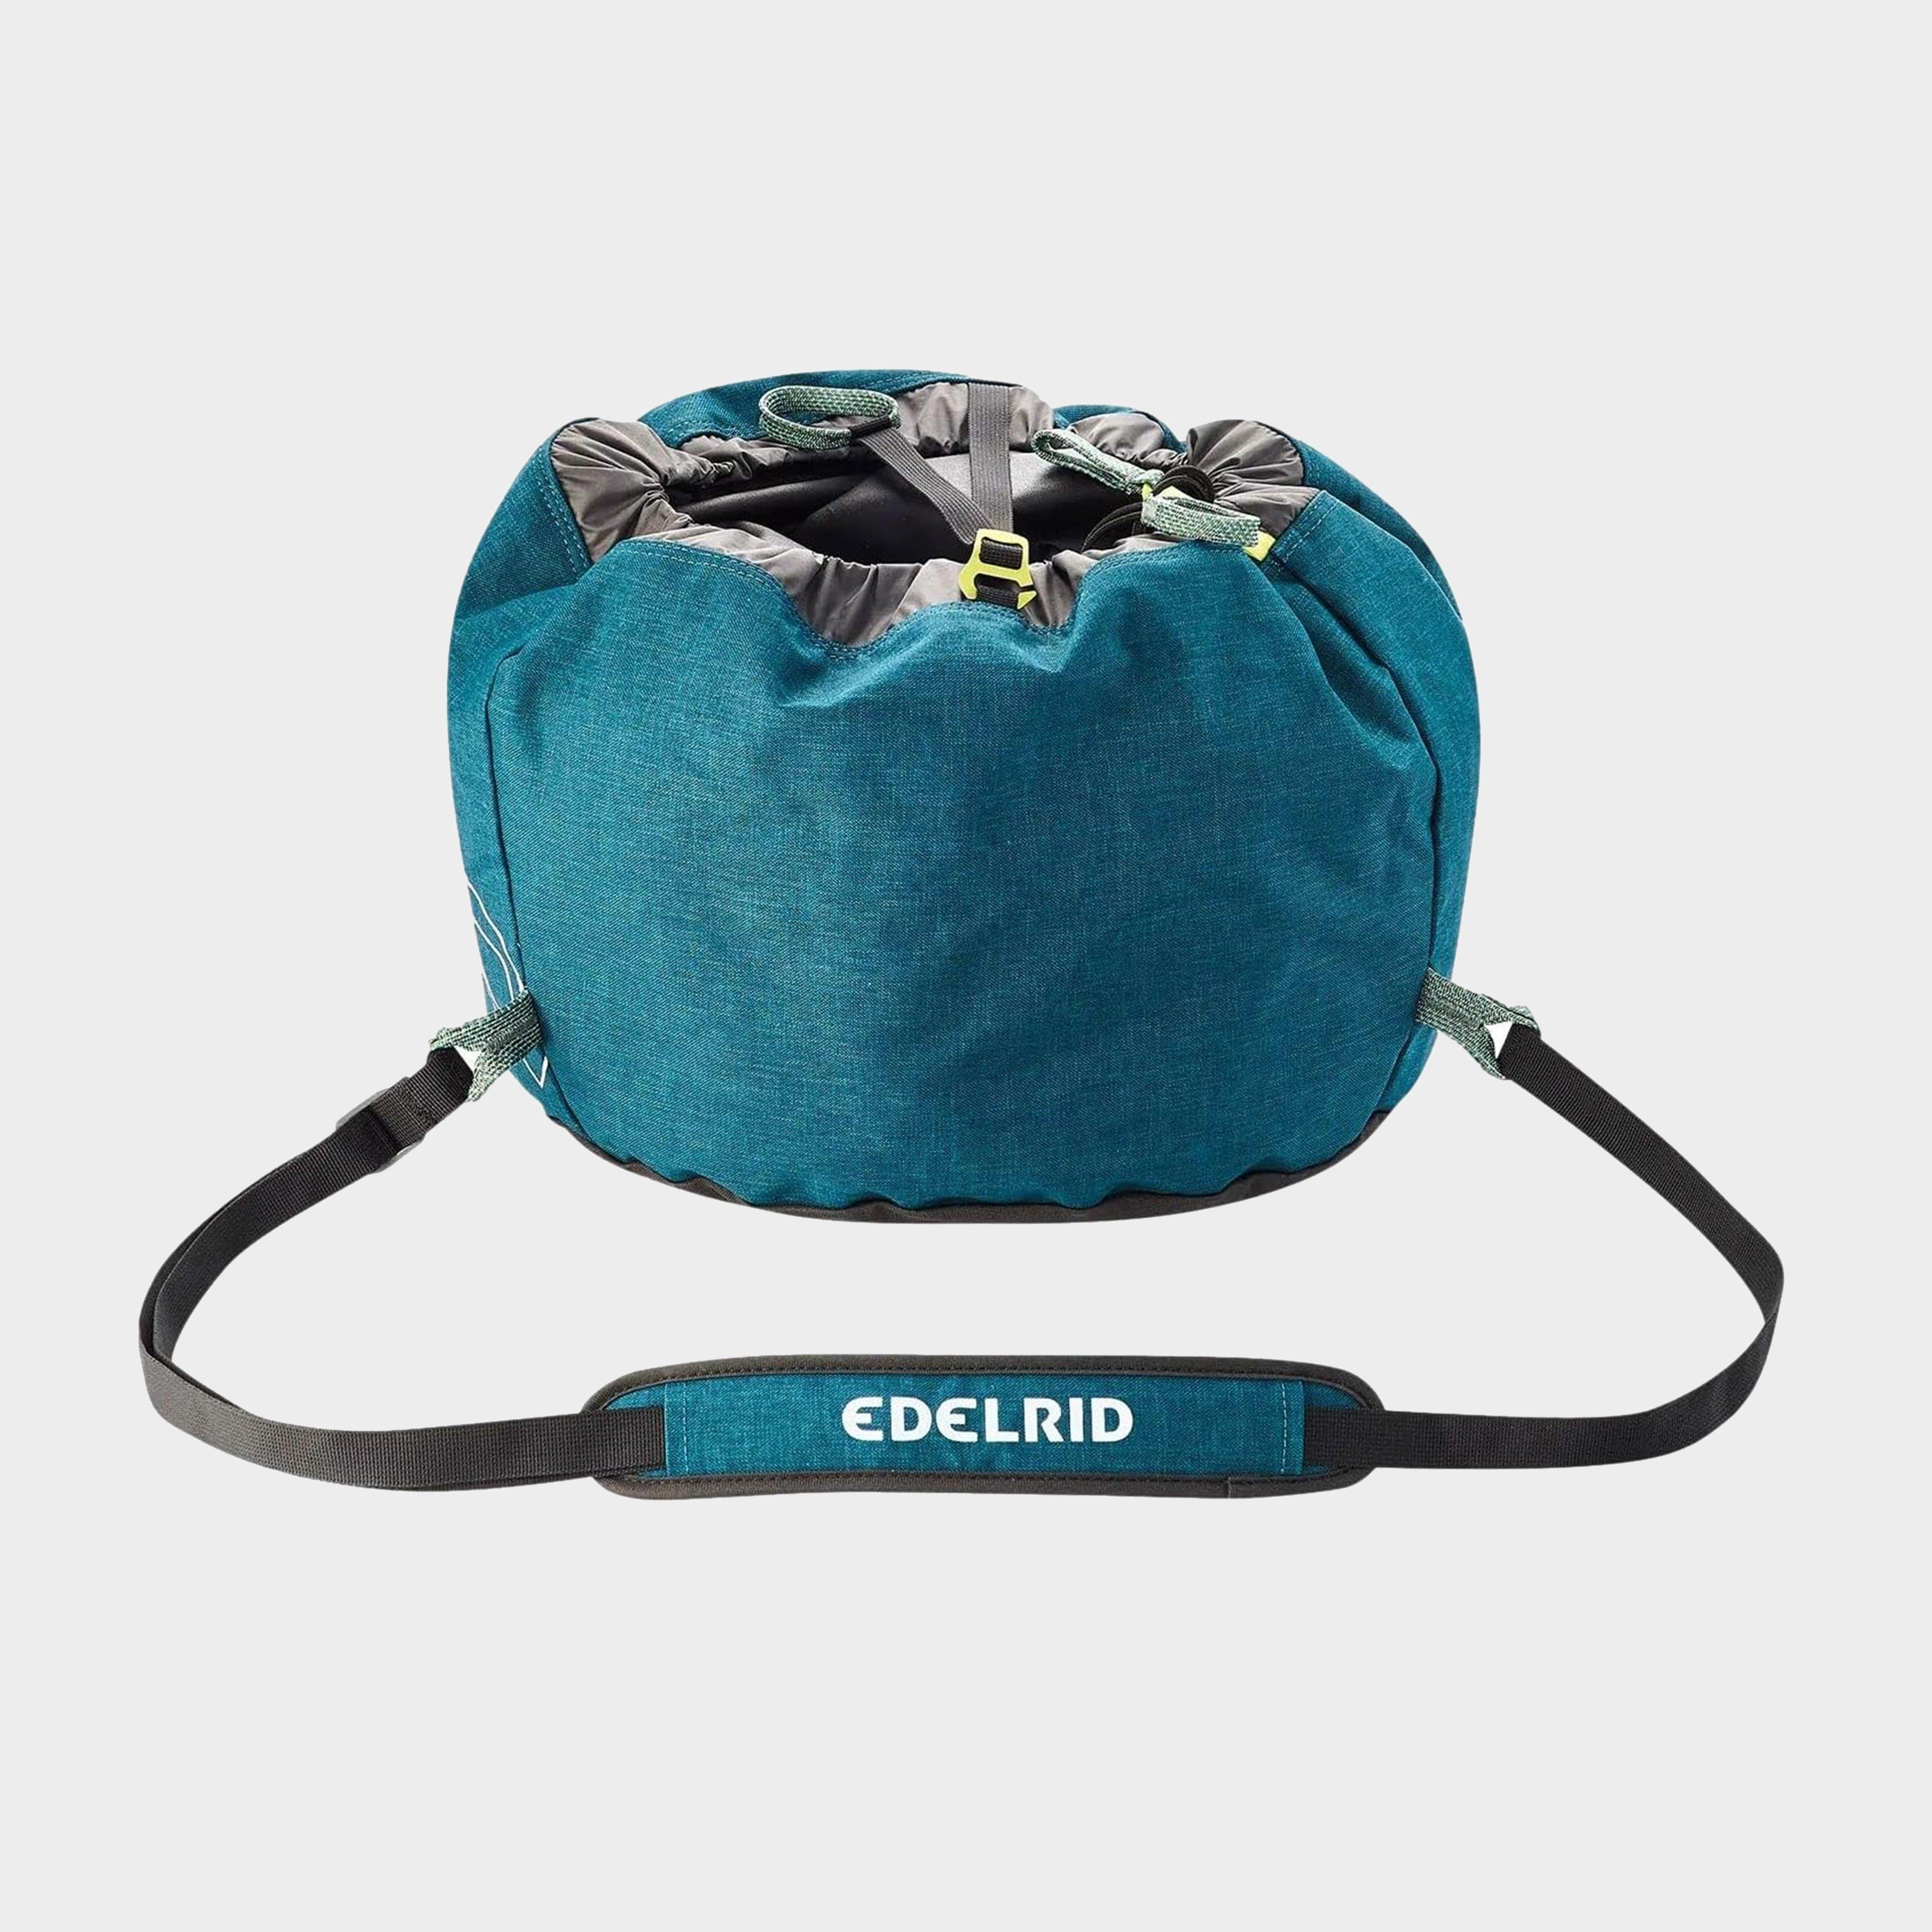 Edelrid Edelrid Caddy Rope Bag - Mid Blue, Mid Blue